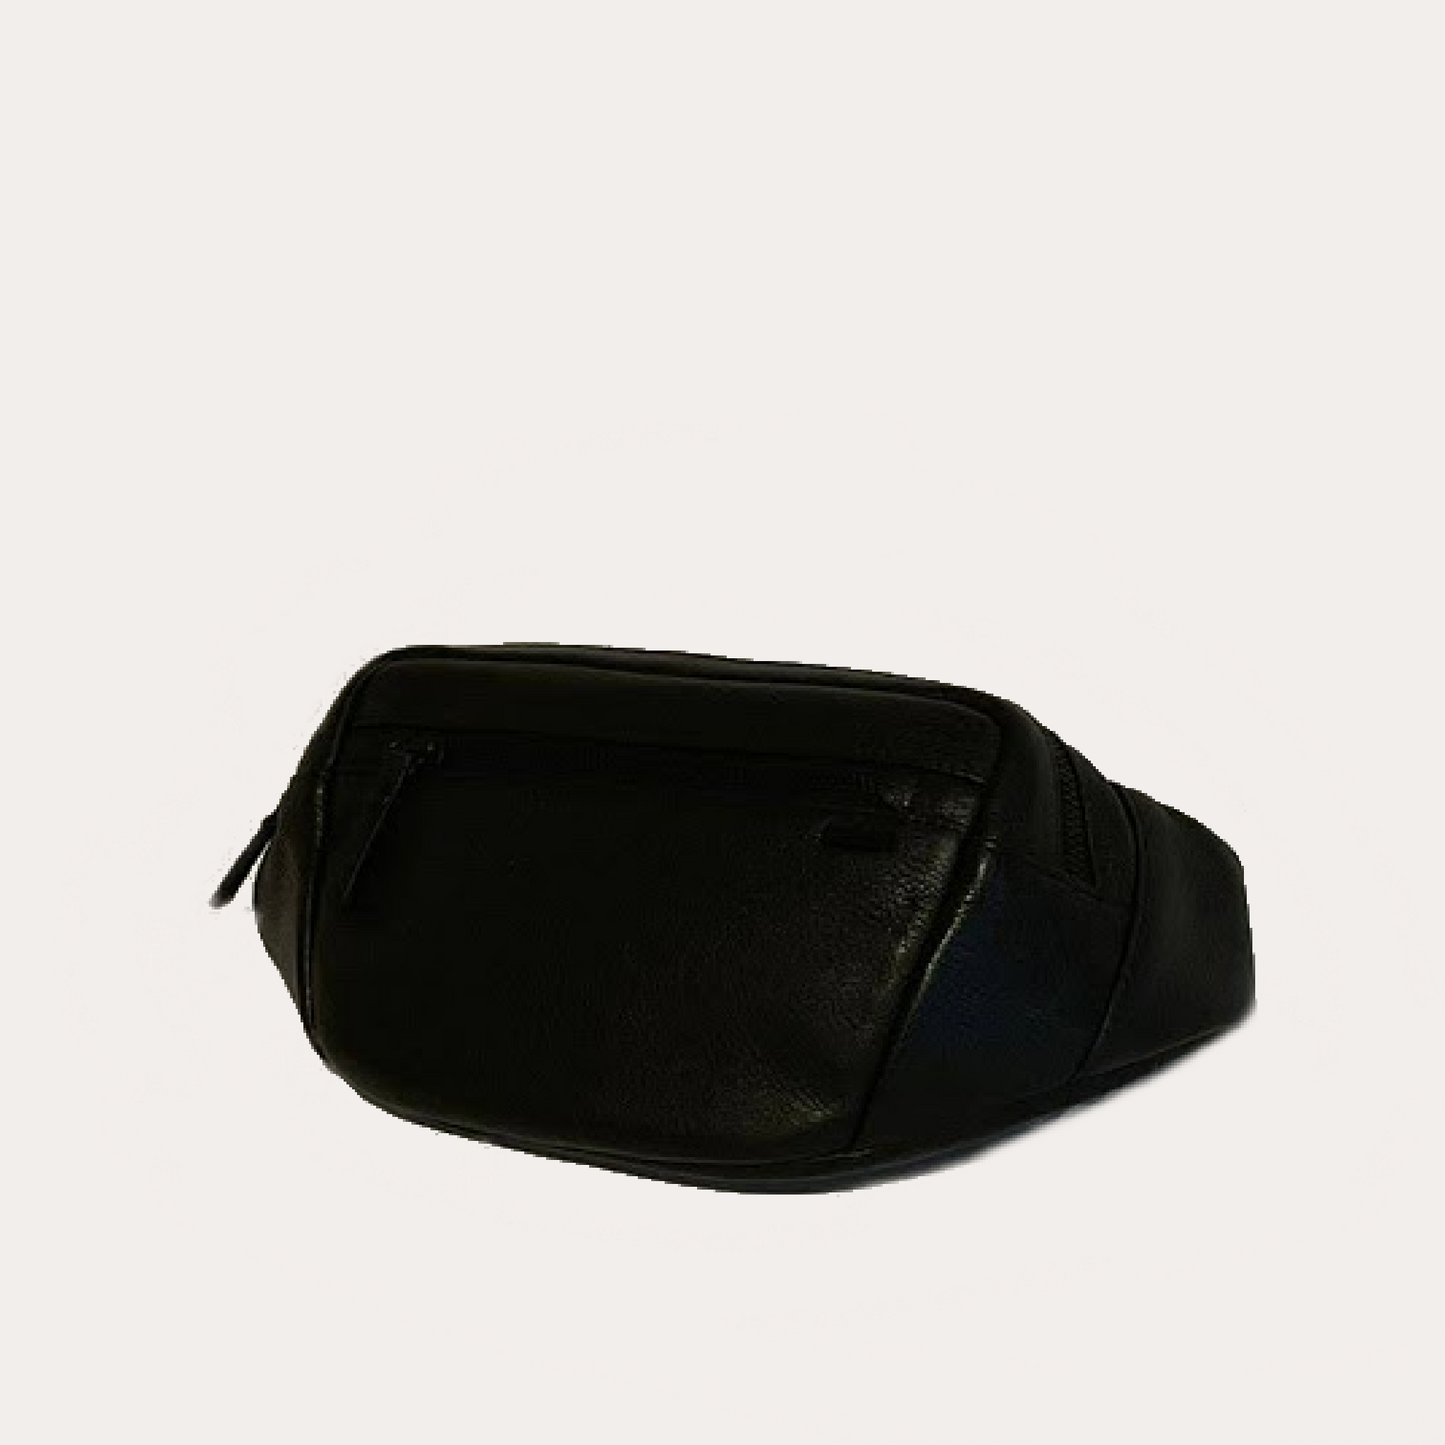 Gianni Conti Black Leather Bum Bag